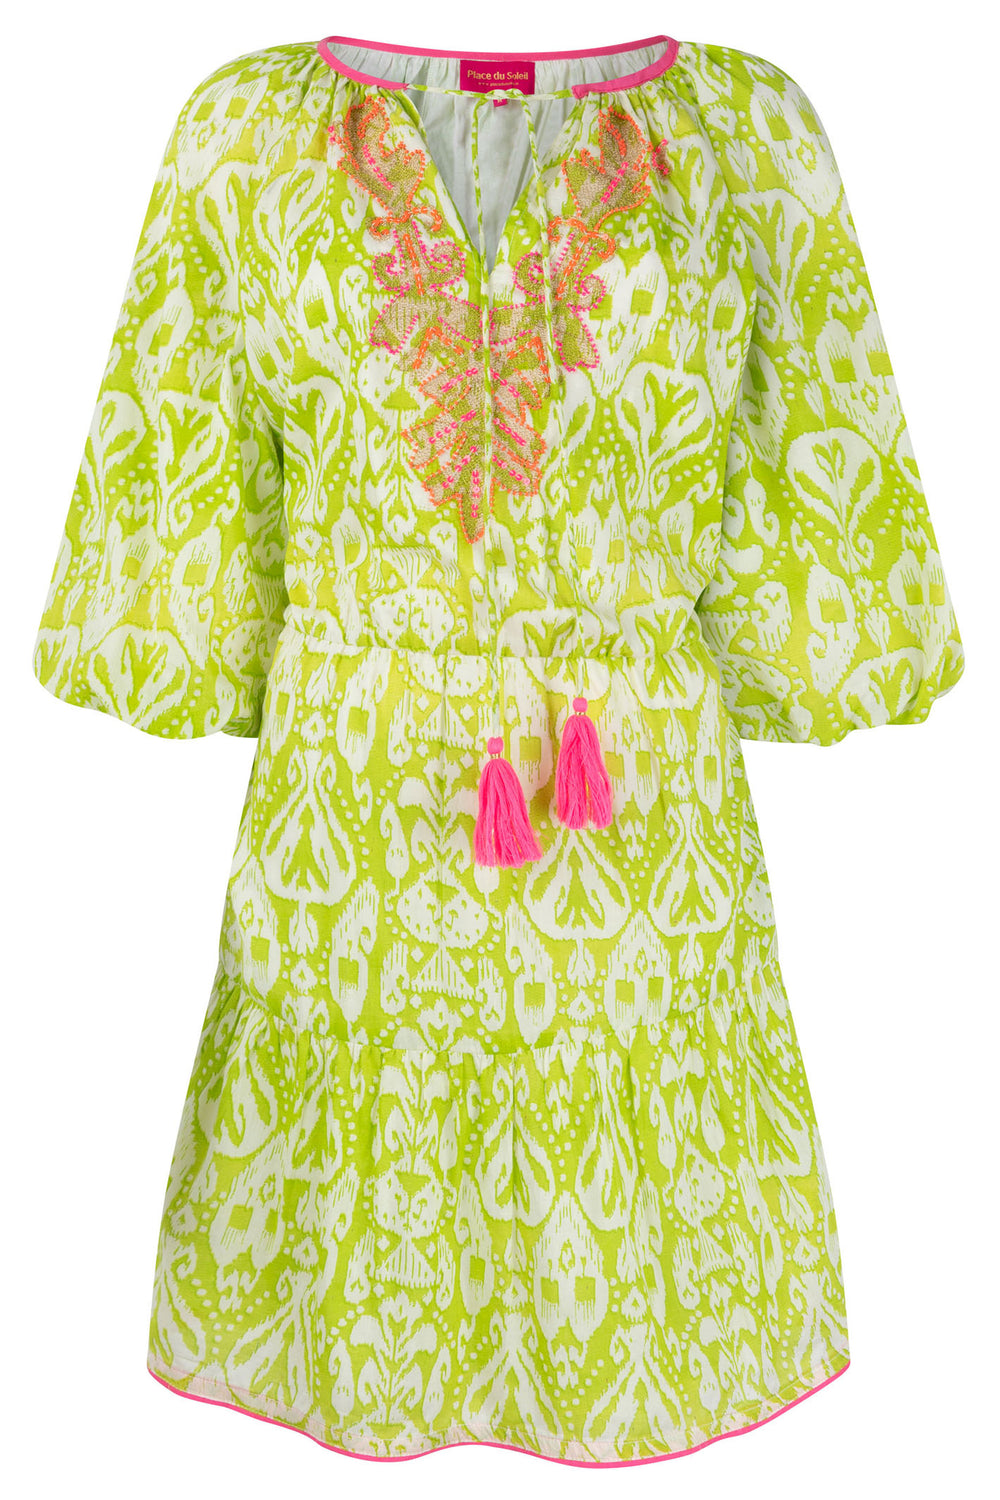 Place du Soleil S24 129 Lime Green Print Short Summer Dress - Olivia Grace Fashion